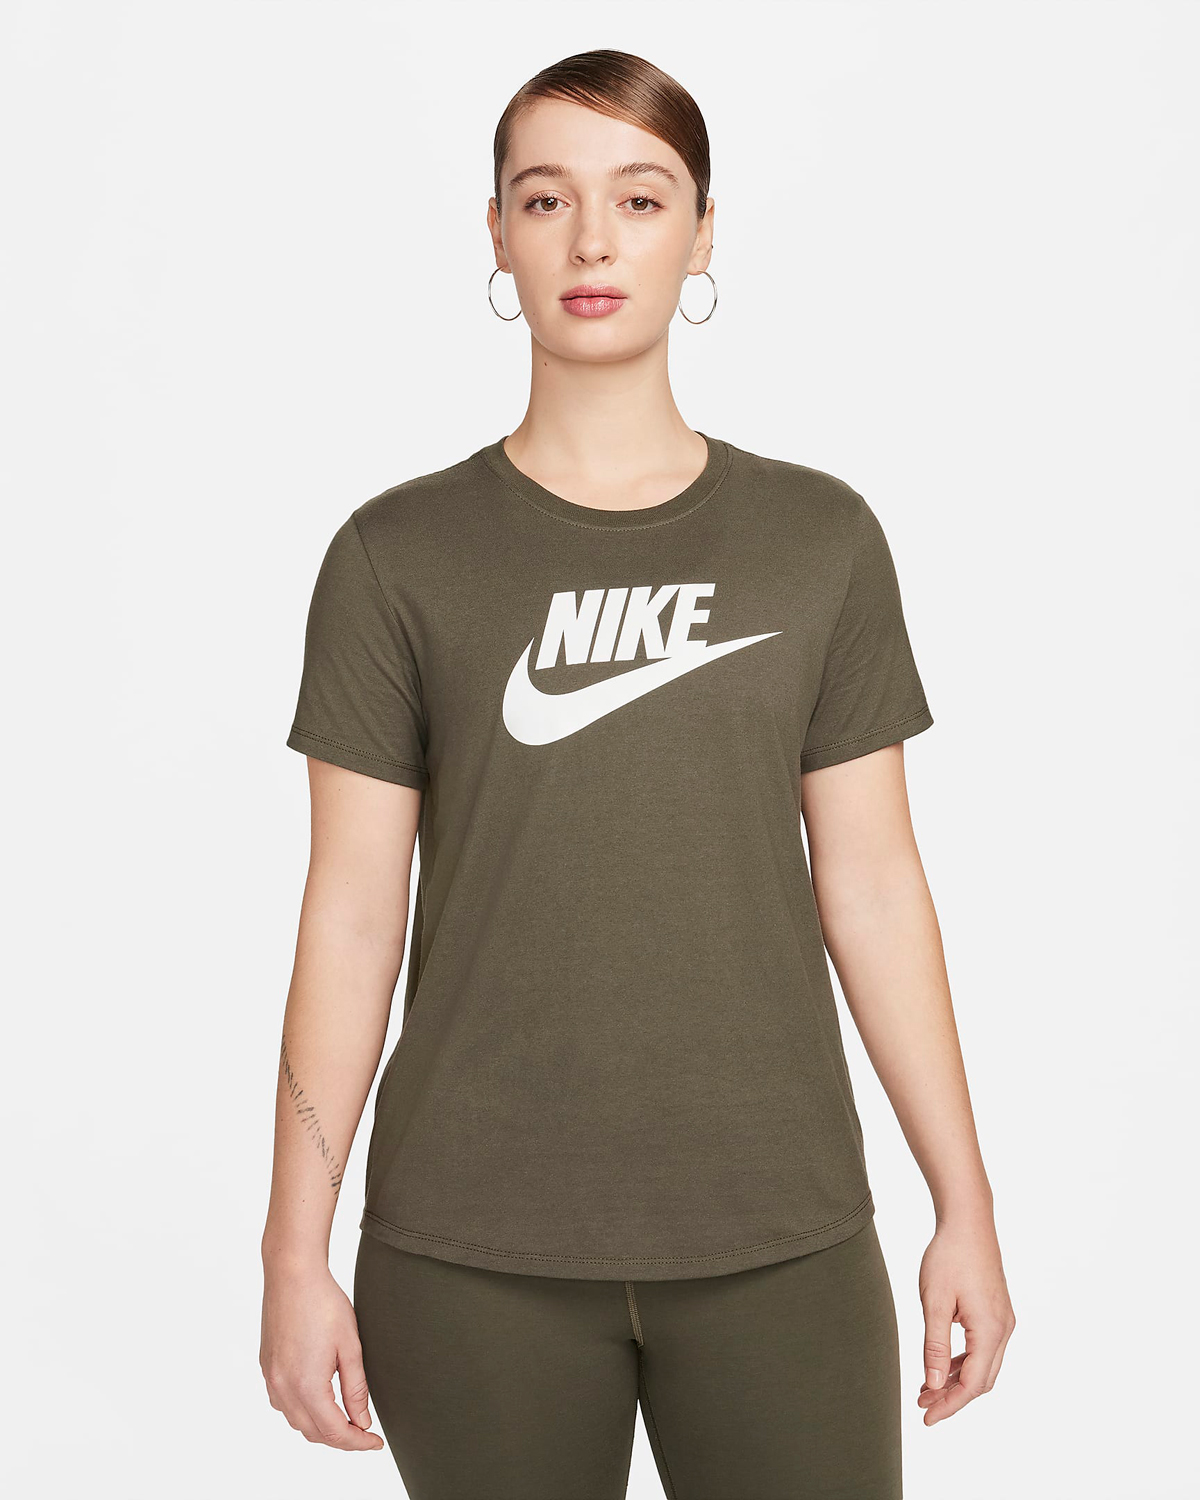 Nike-Sportswear-Womens-T-Shirt-Olive-Cargo-Khaki